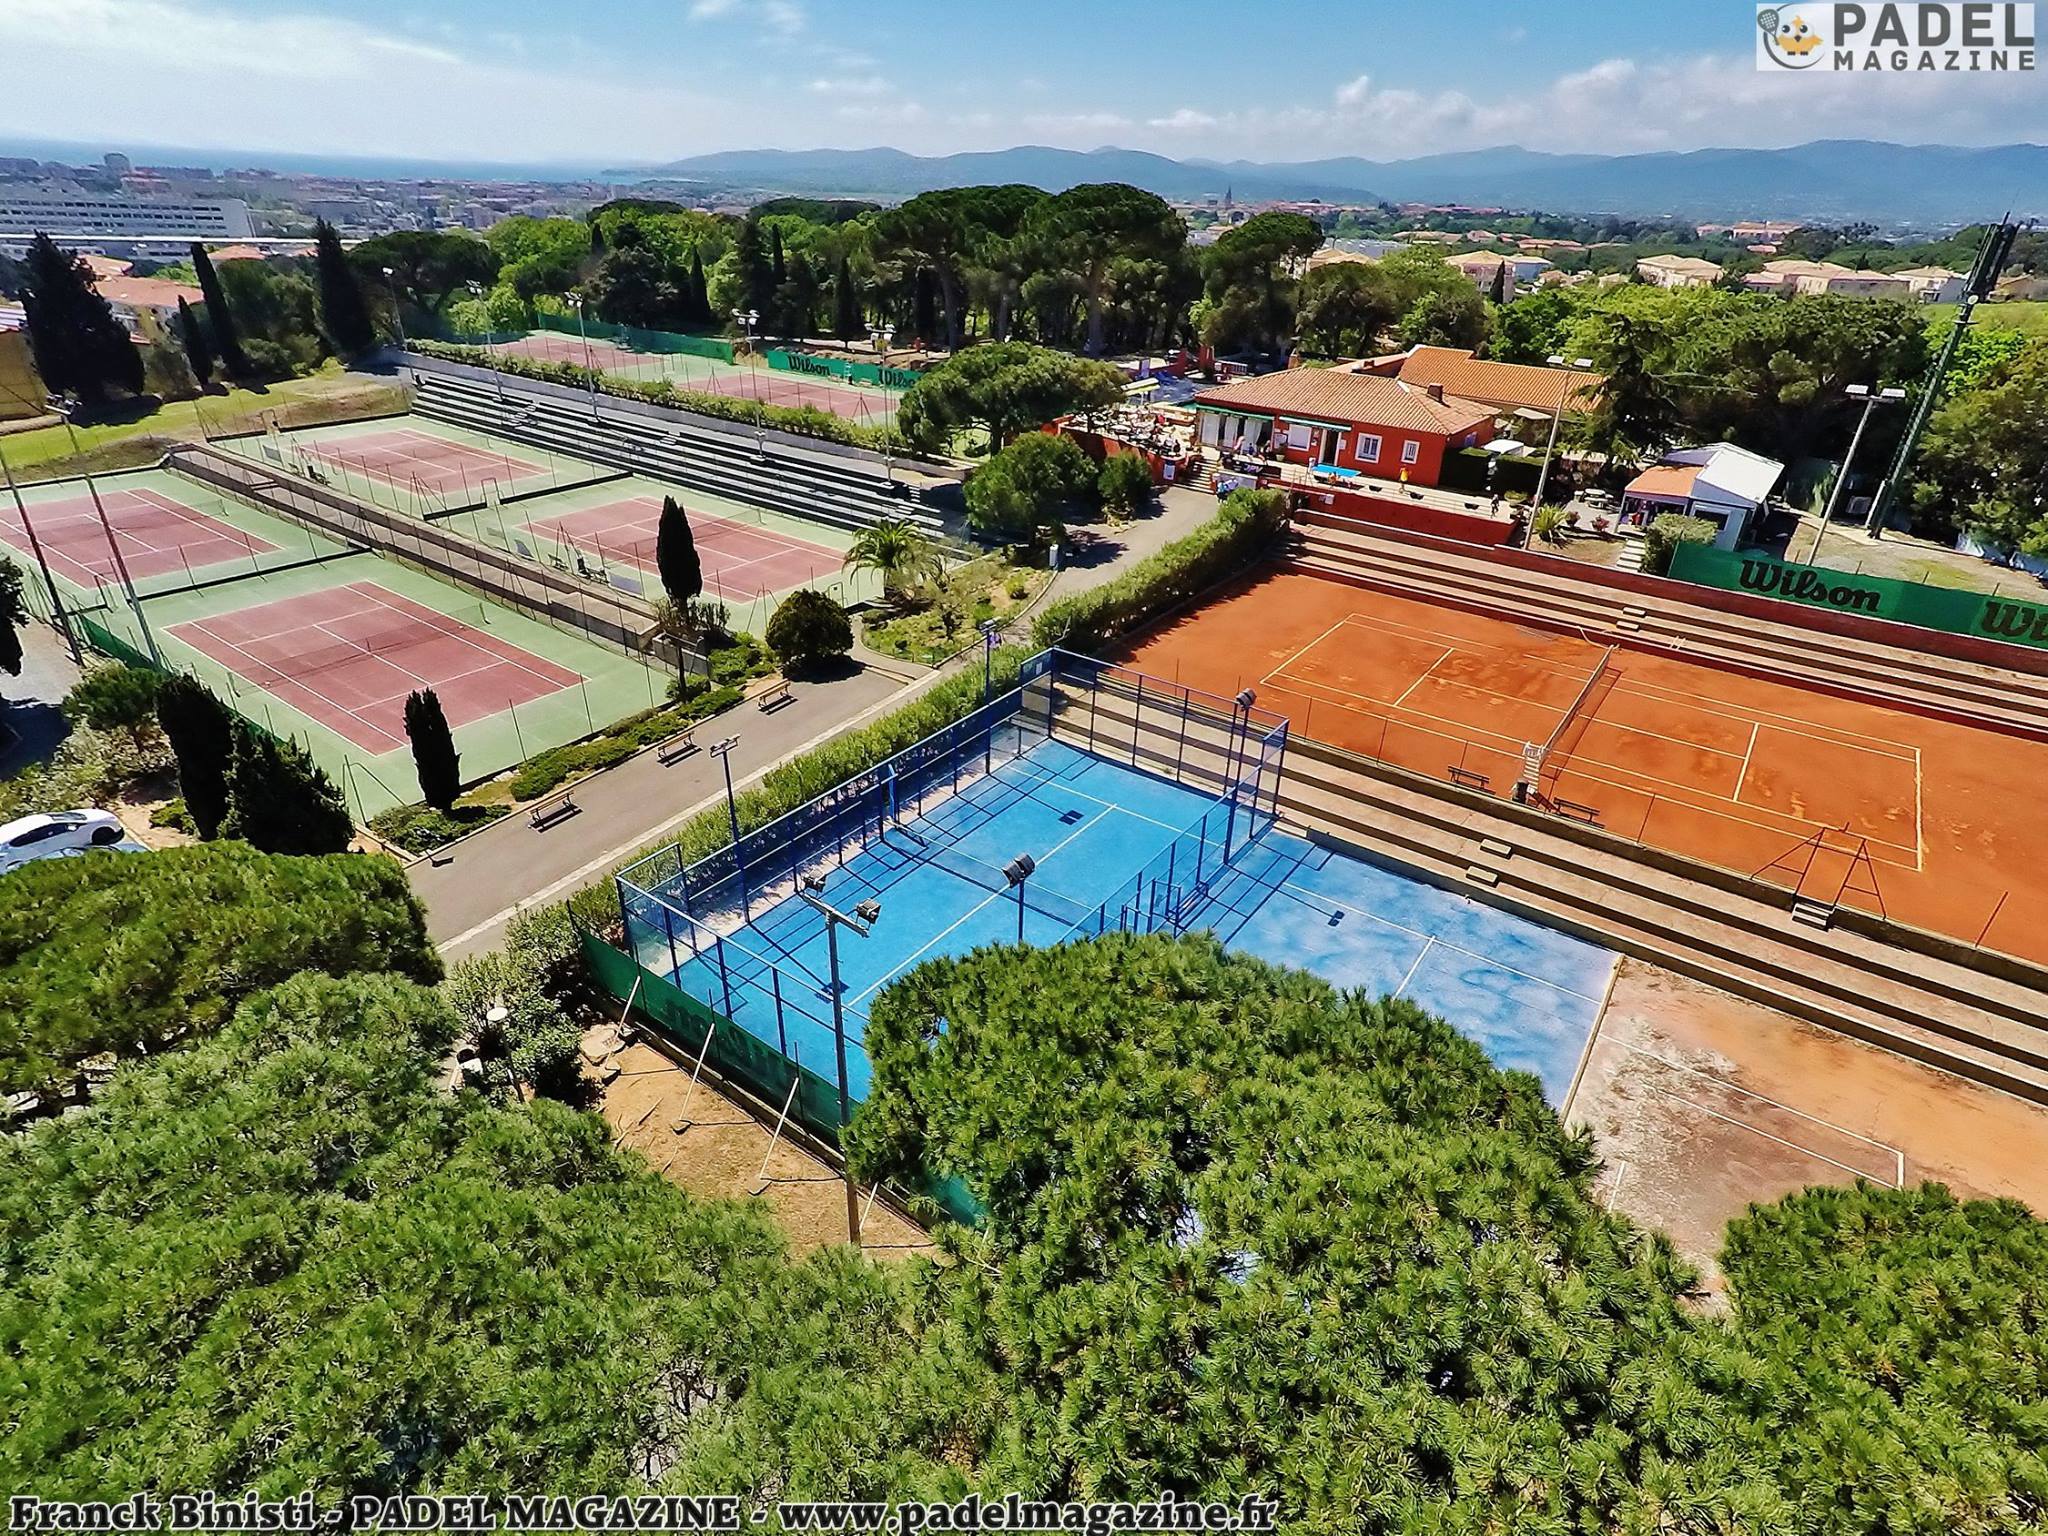 The Tennis Club de Fréjus offers padel